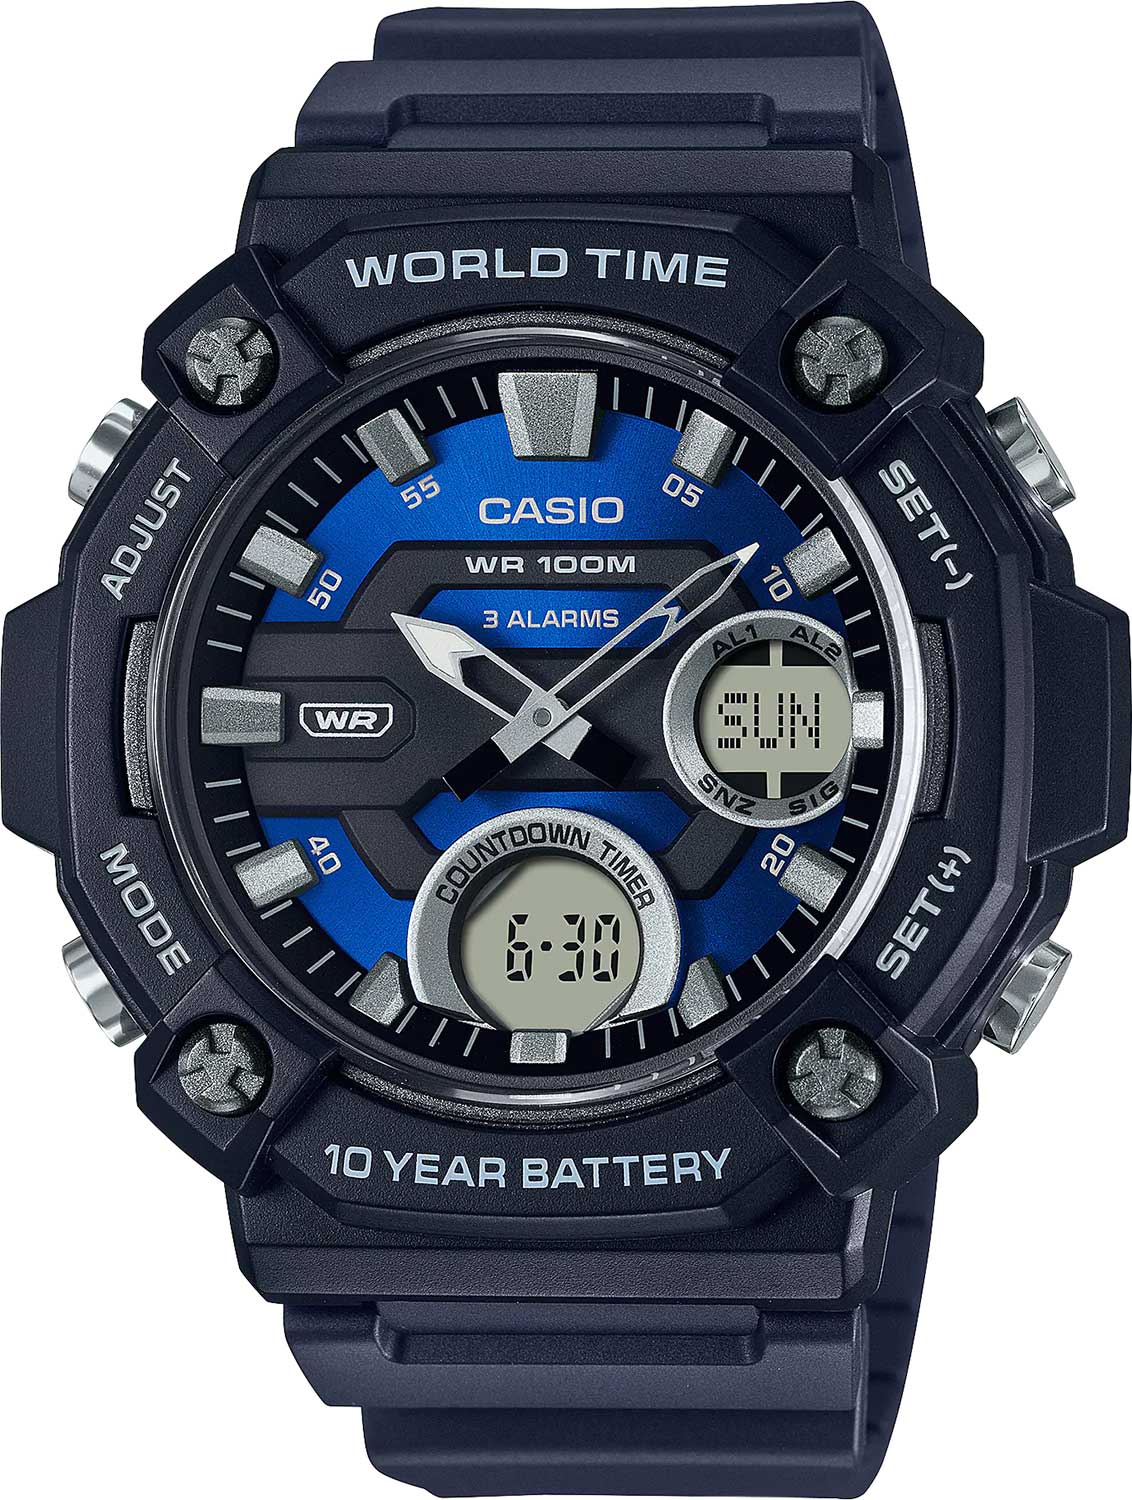 Наручные часы Casio AEQ-120W-2A наручные часы casio collection aeq 120w 2a черный мультиколор